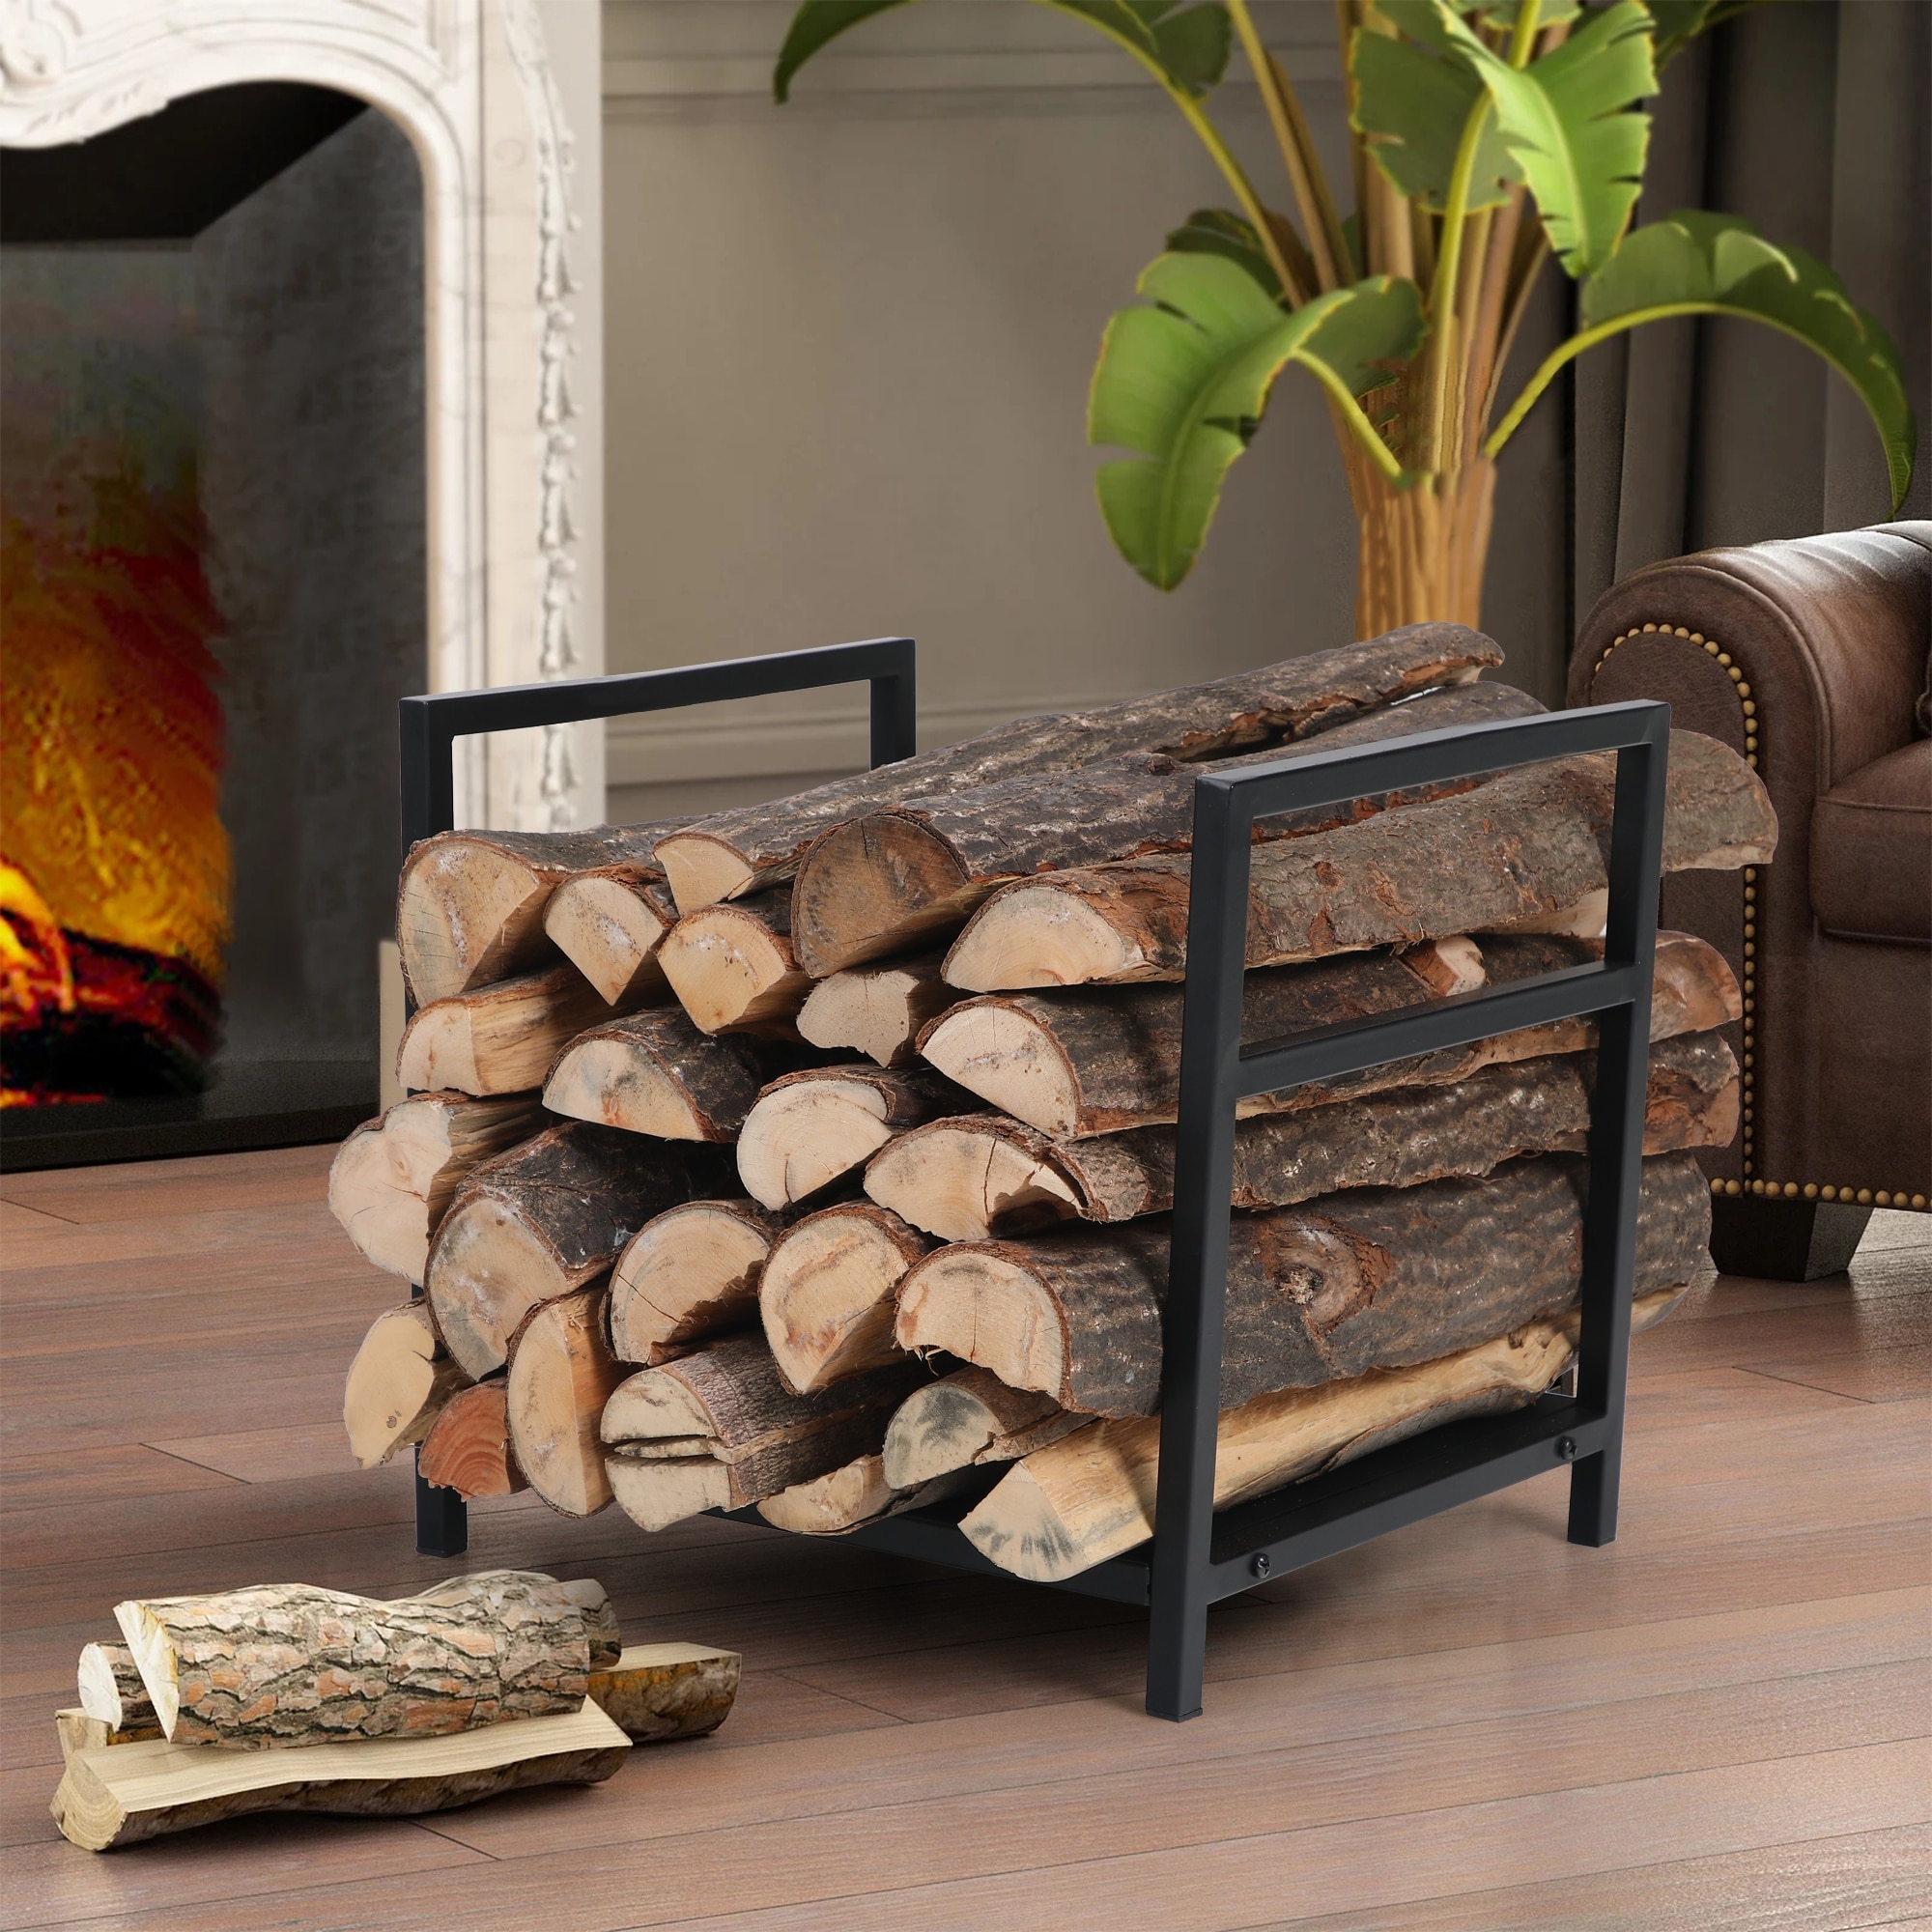 Phi Villa 17 inch Small Decorative Indoor/Outdoor Firewood Racks Steel Wood Storage Log Rack Holder